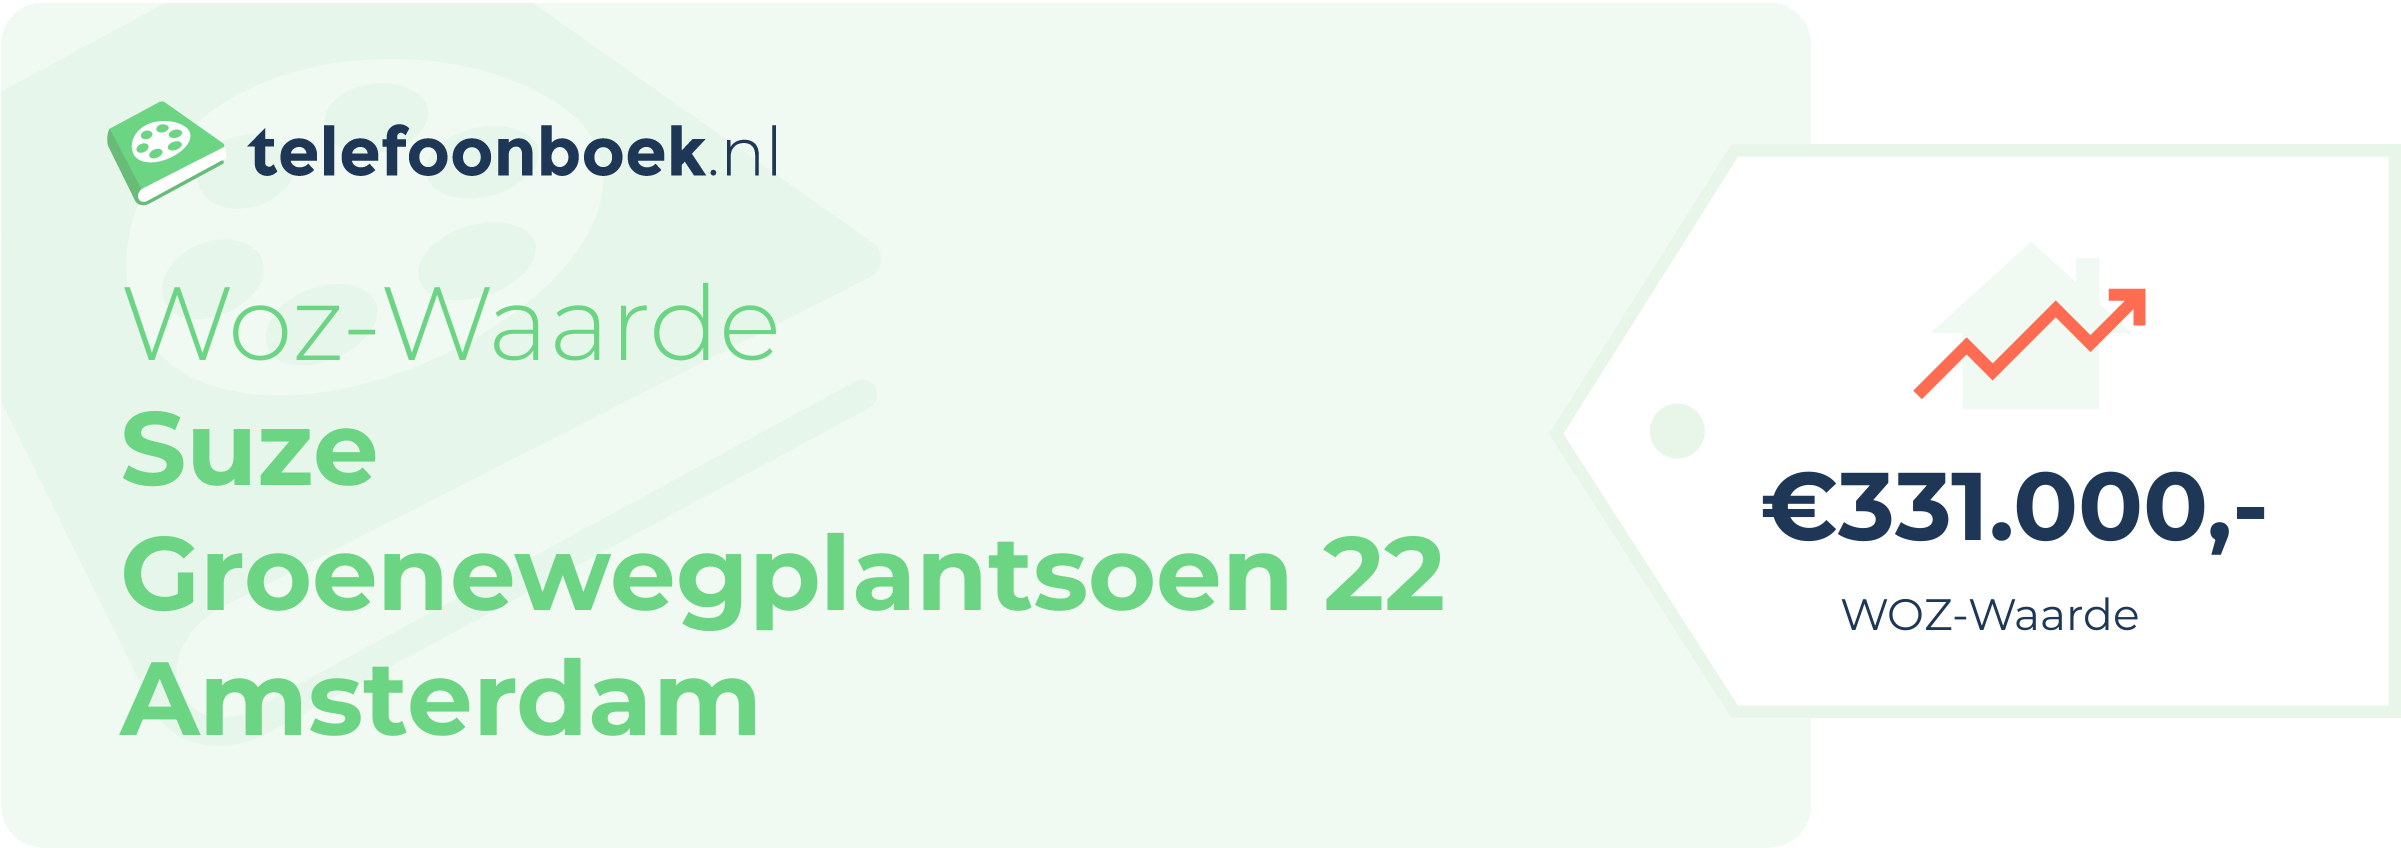 WOZ-waarde Suze Groenewegplantsoen 22 Amsterdam